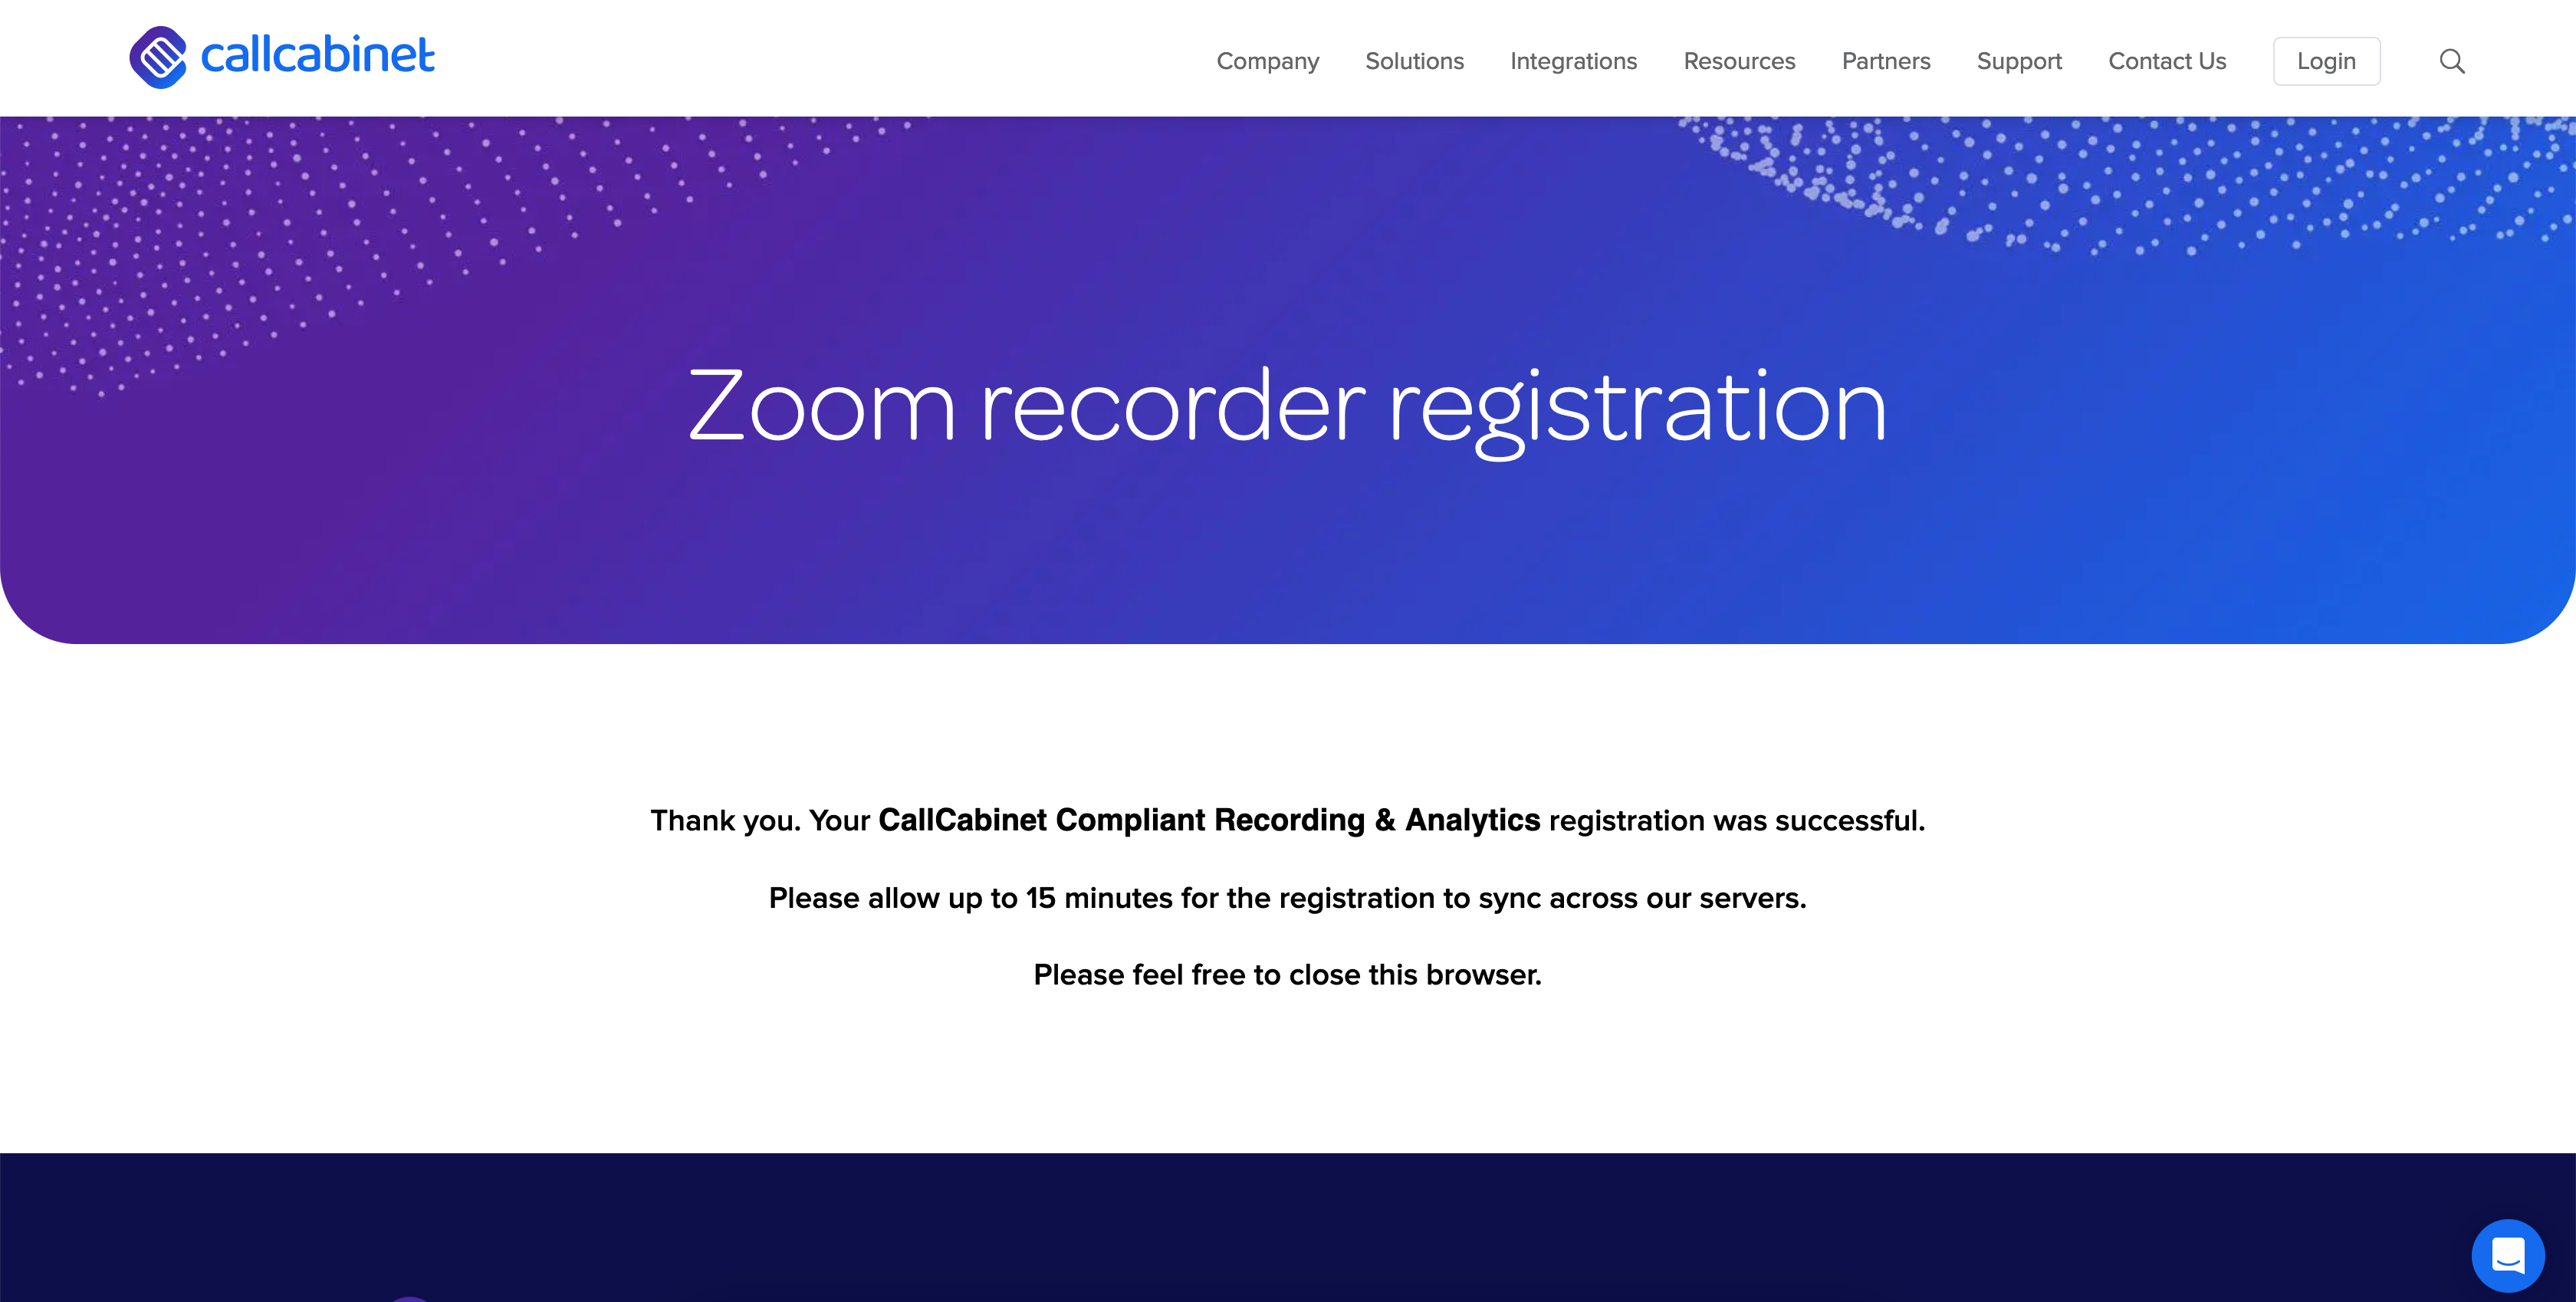 Zoom recorder registration successful